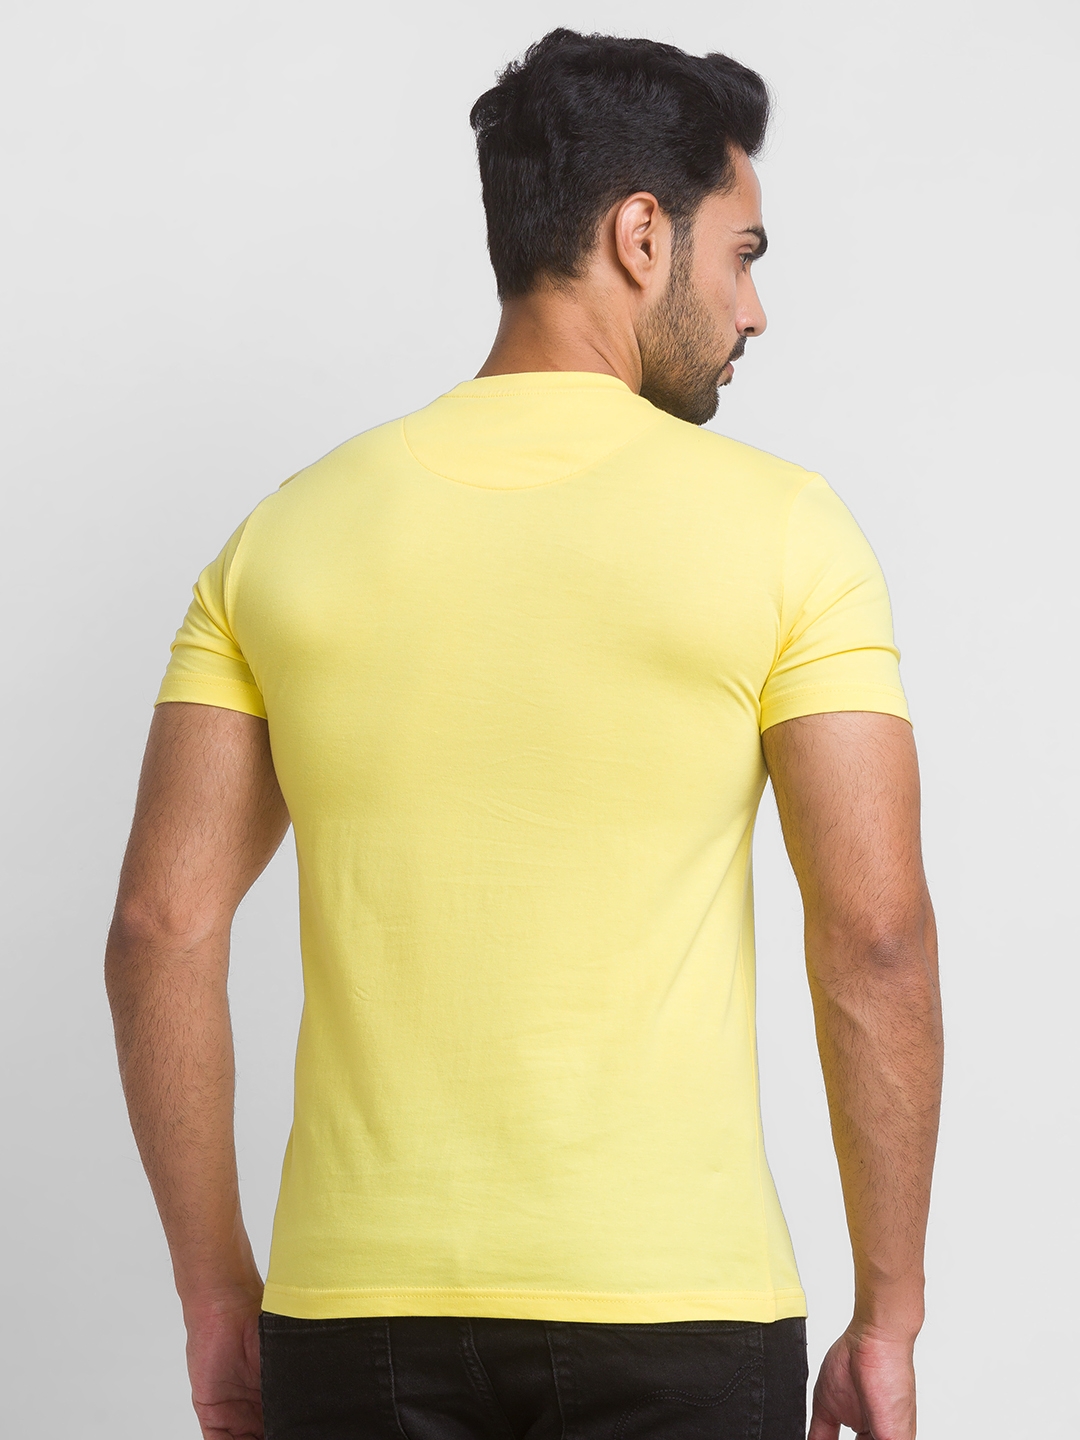 globus | Globus Yellow Printed Tshirt 2